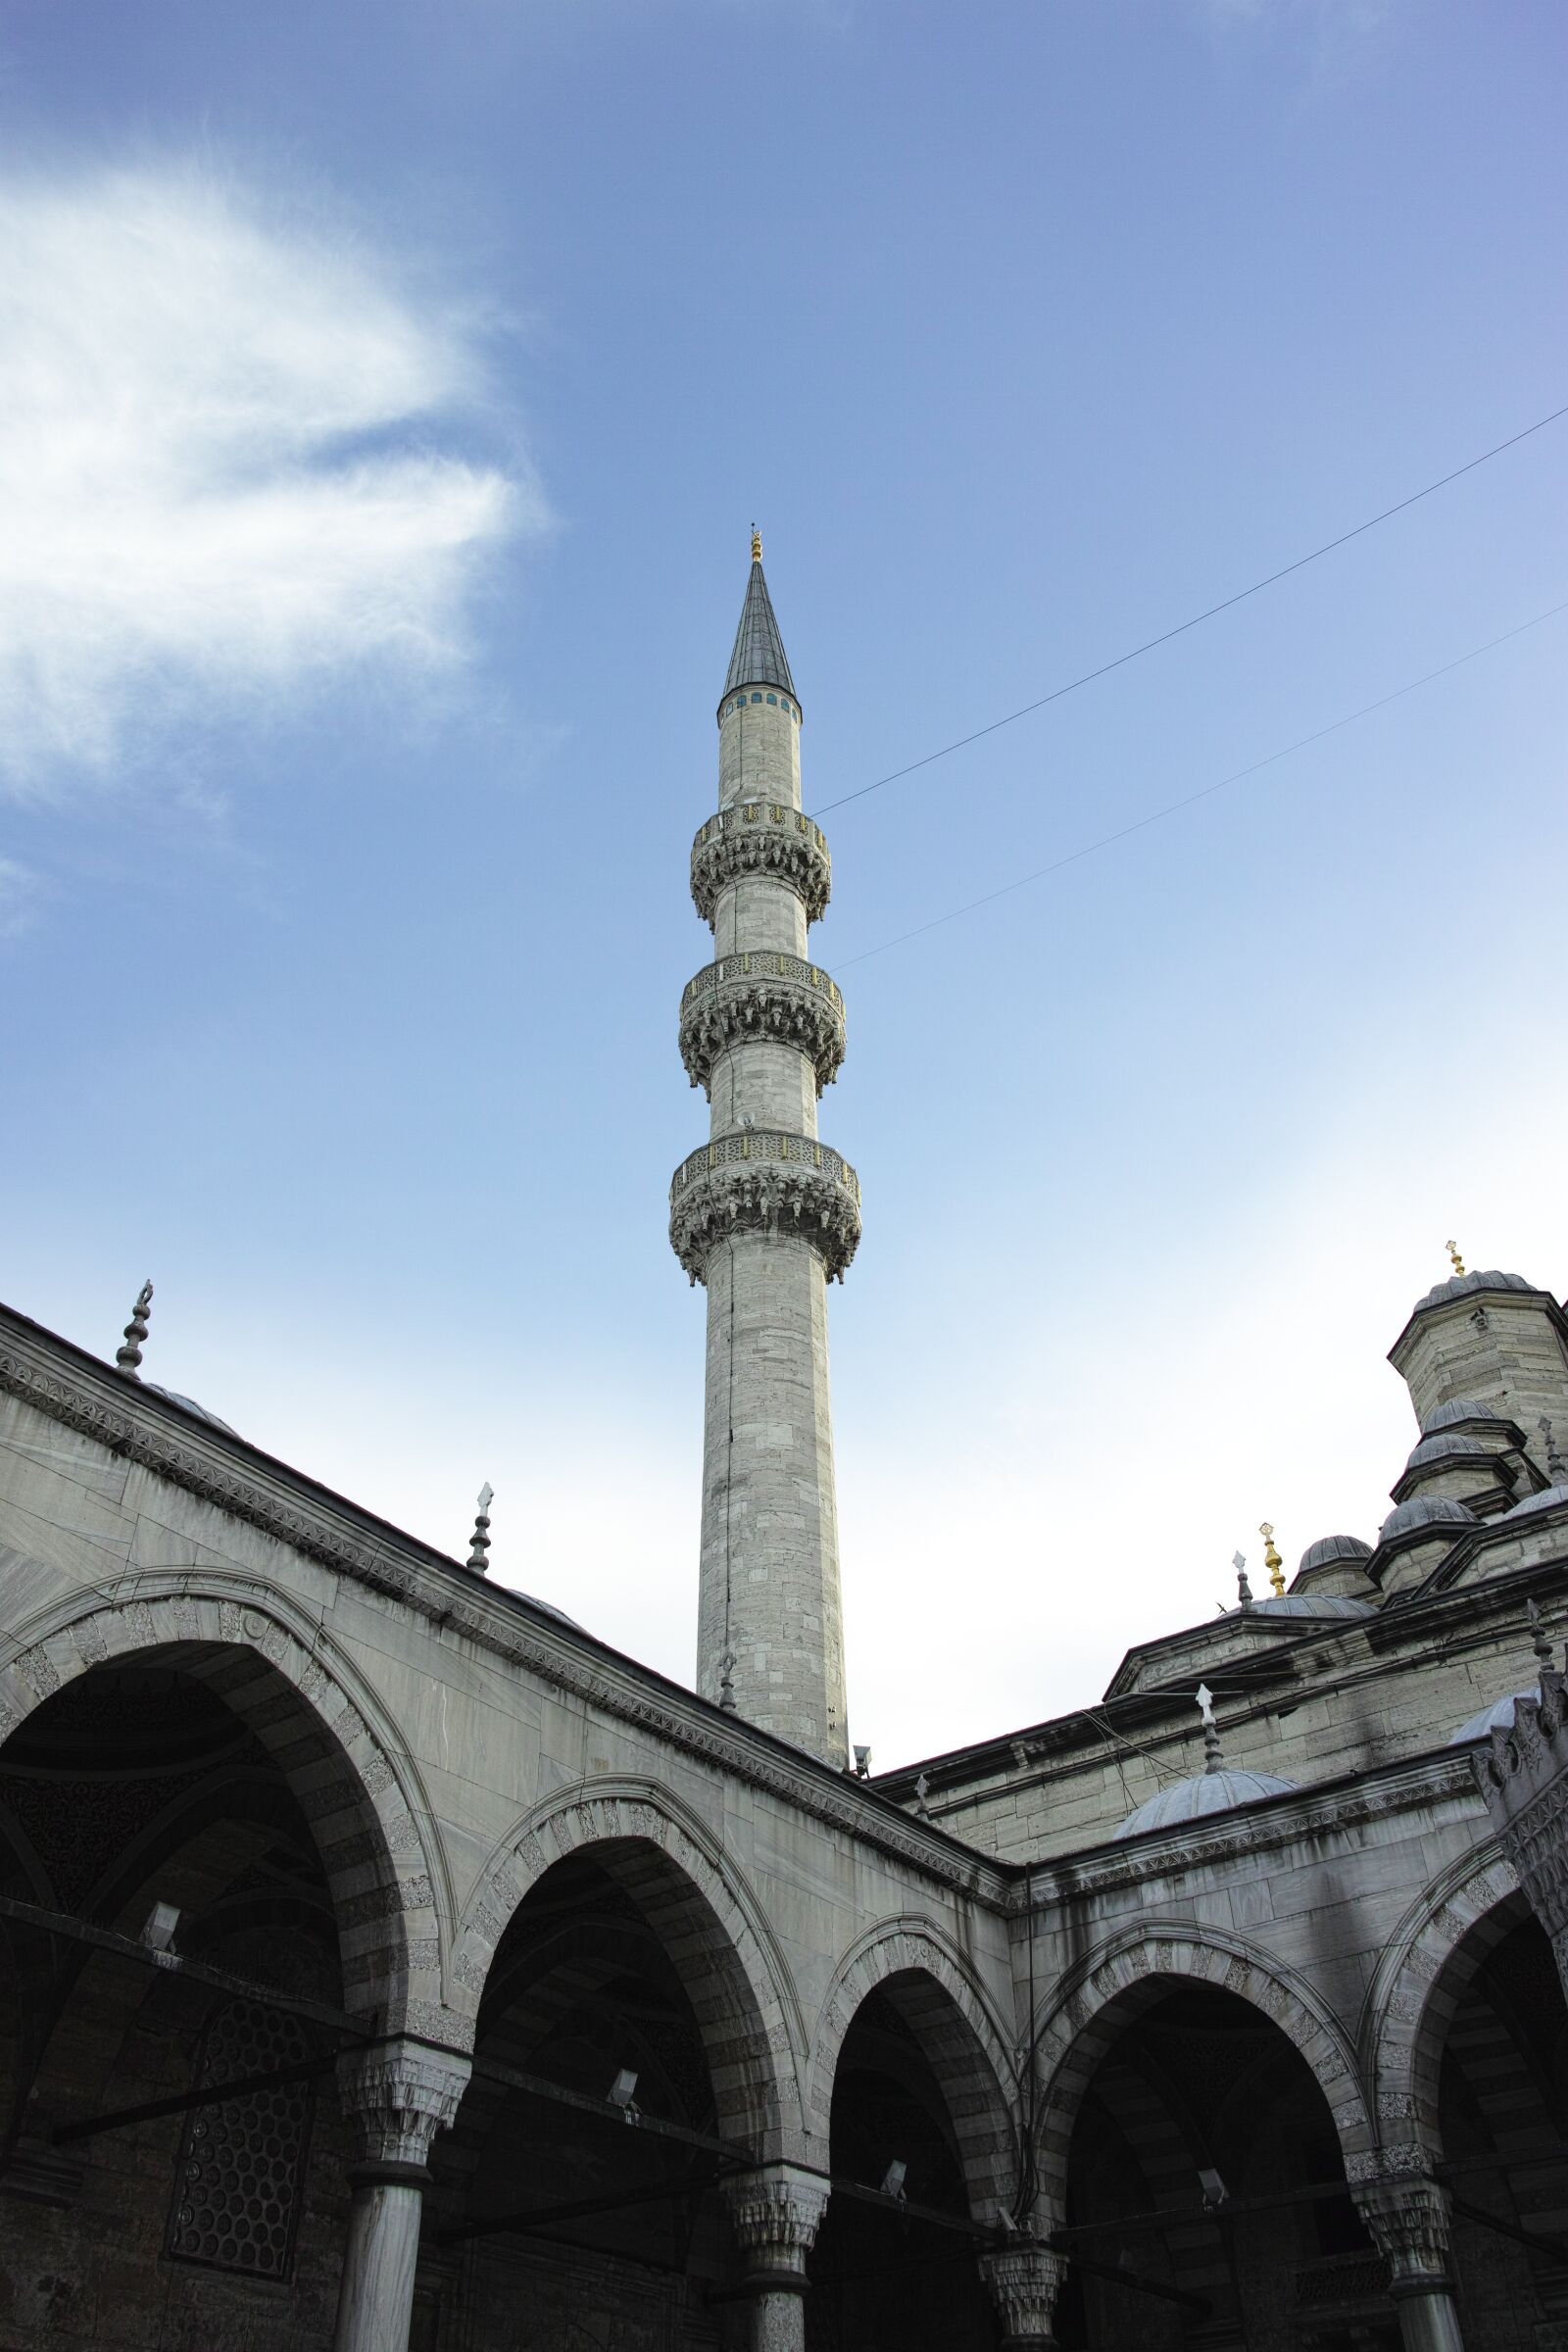 Sigma DP1 Merrill sample photo. Cami, islam, minaret photography